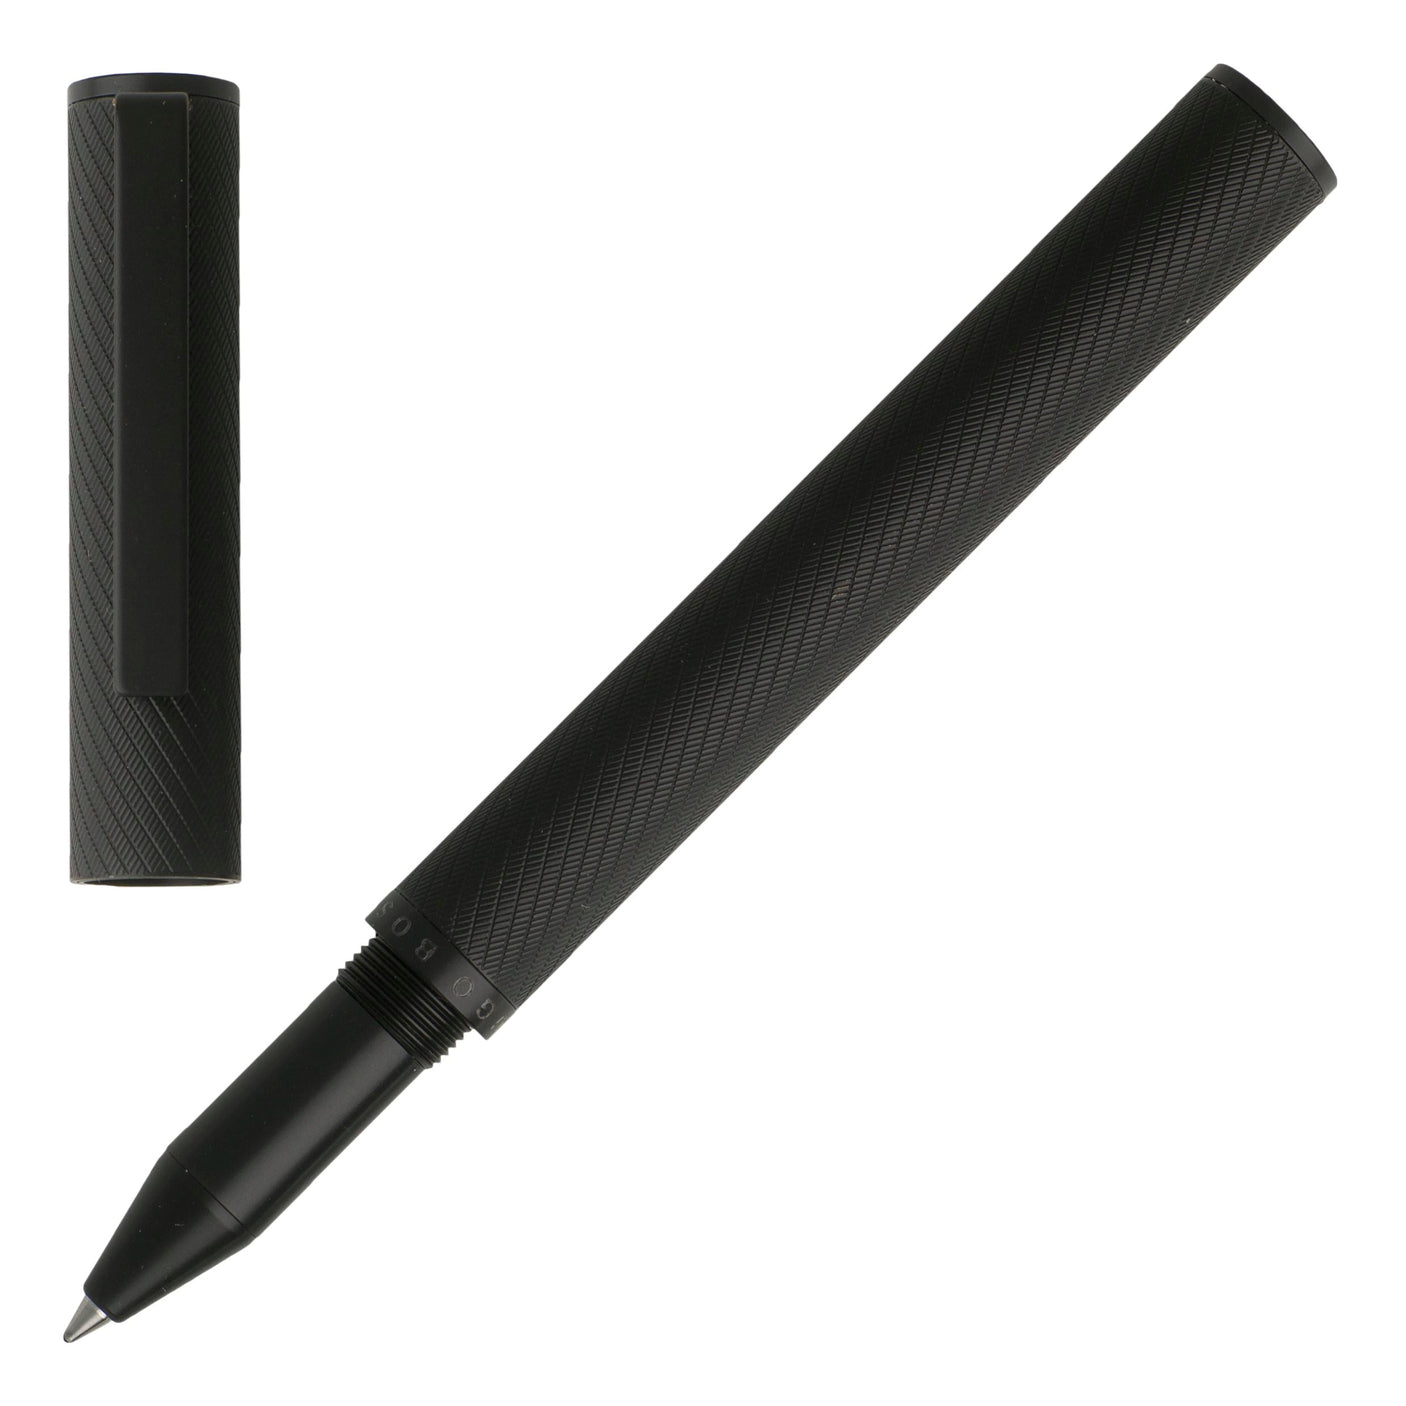 Hugo Boss Fineline Rollerball Pen